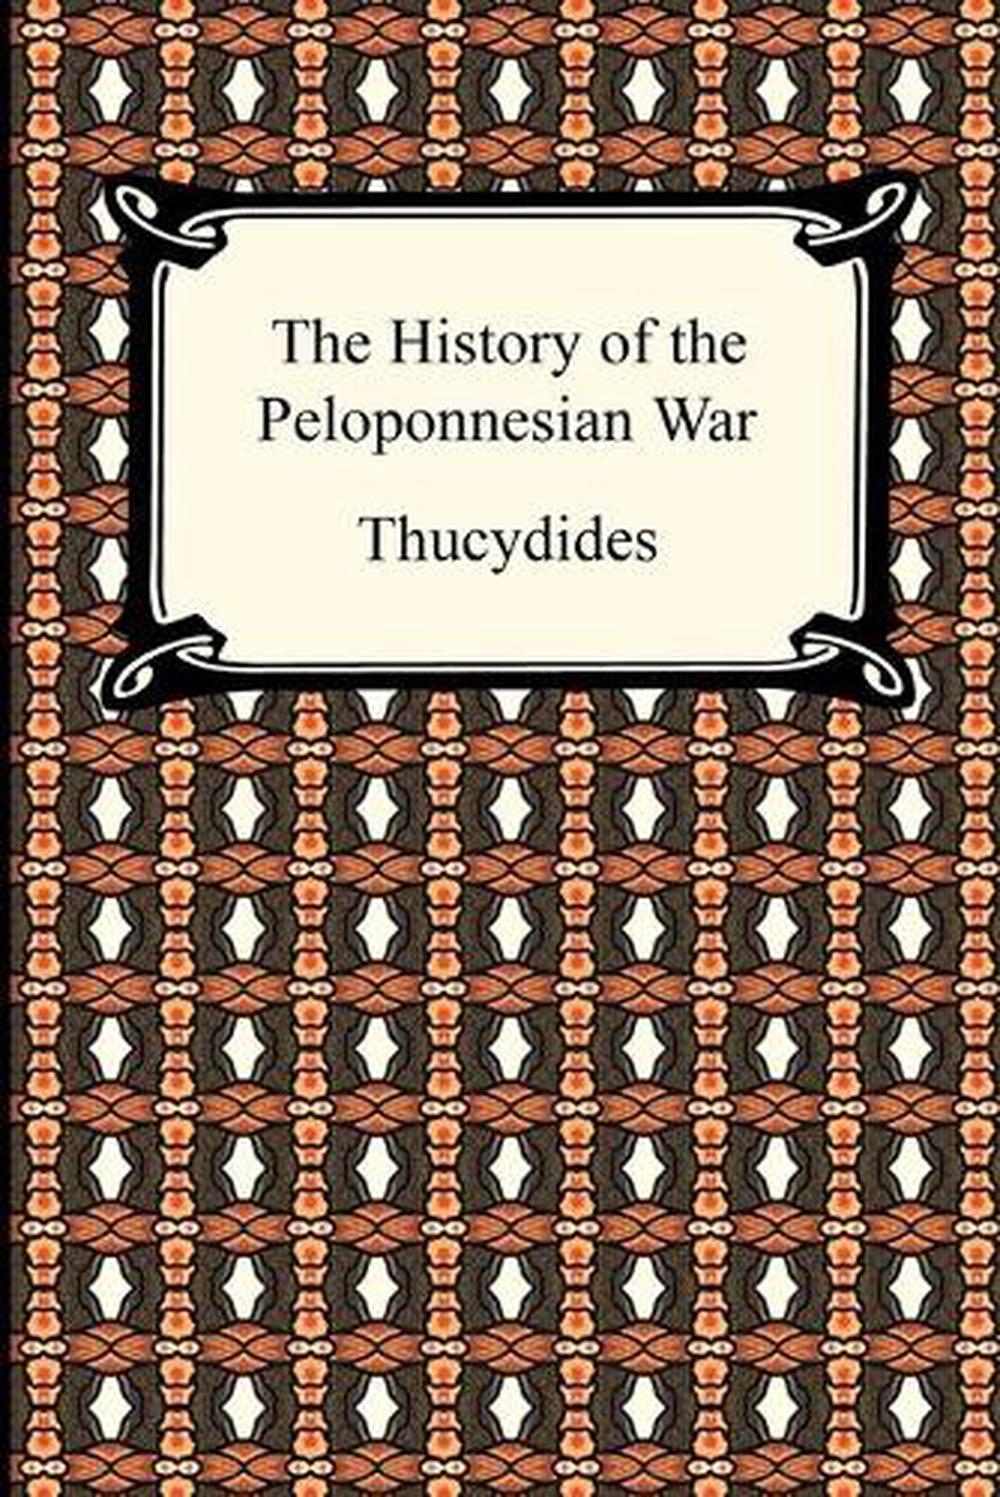 thucydides on the peloponnesian war